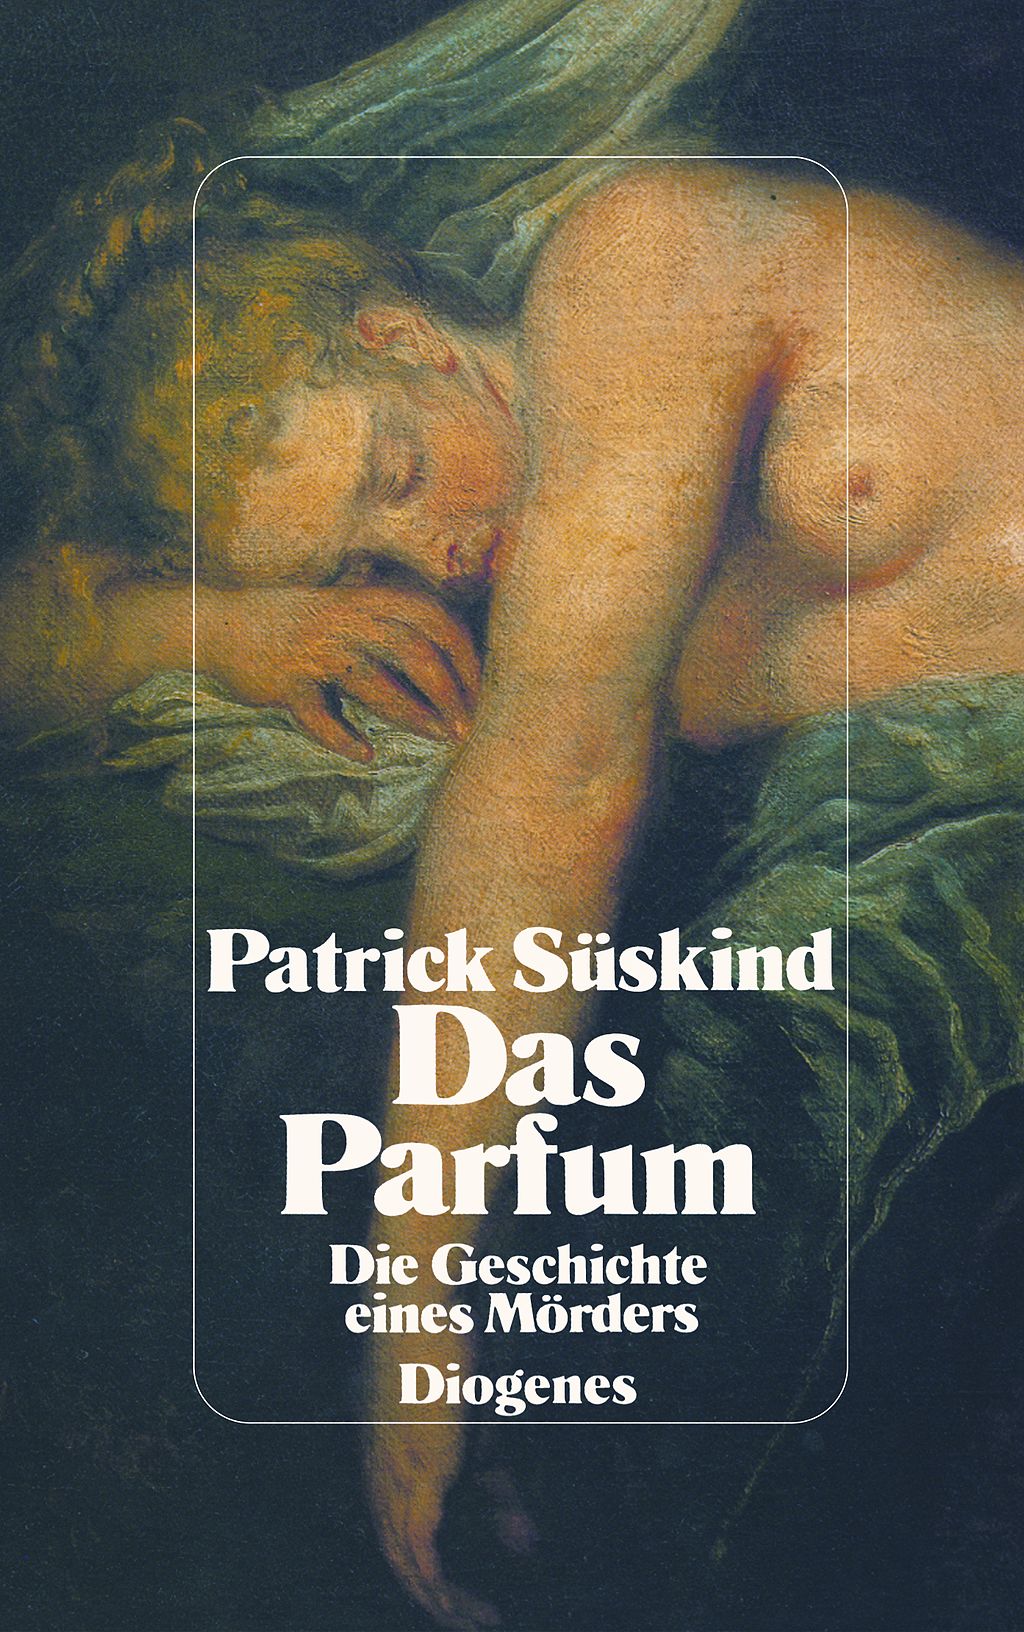 Das Parfum (German language, 1994, Diogenes Verlag)